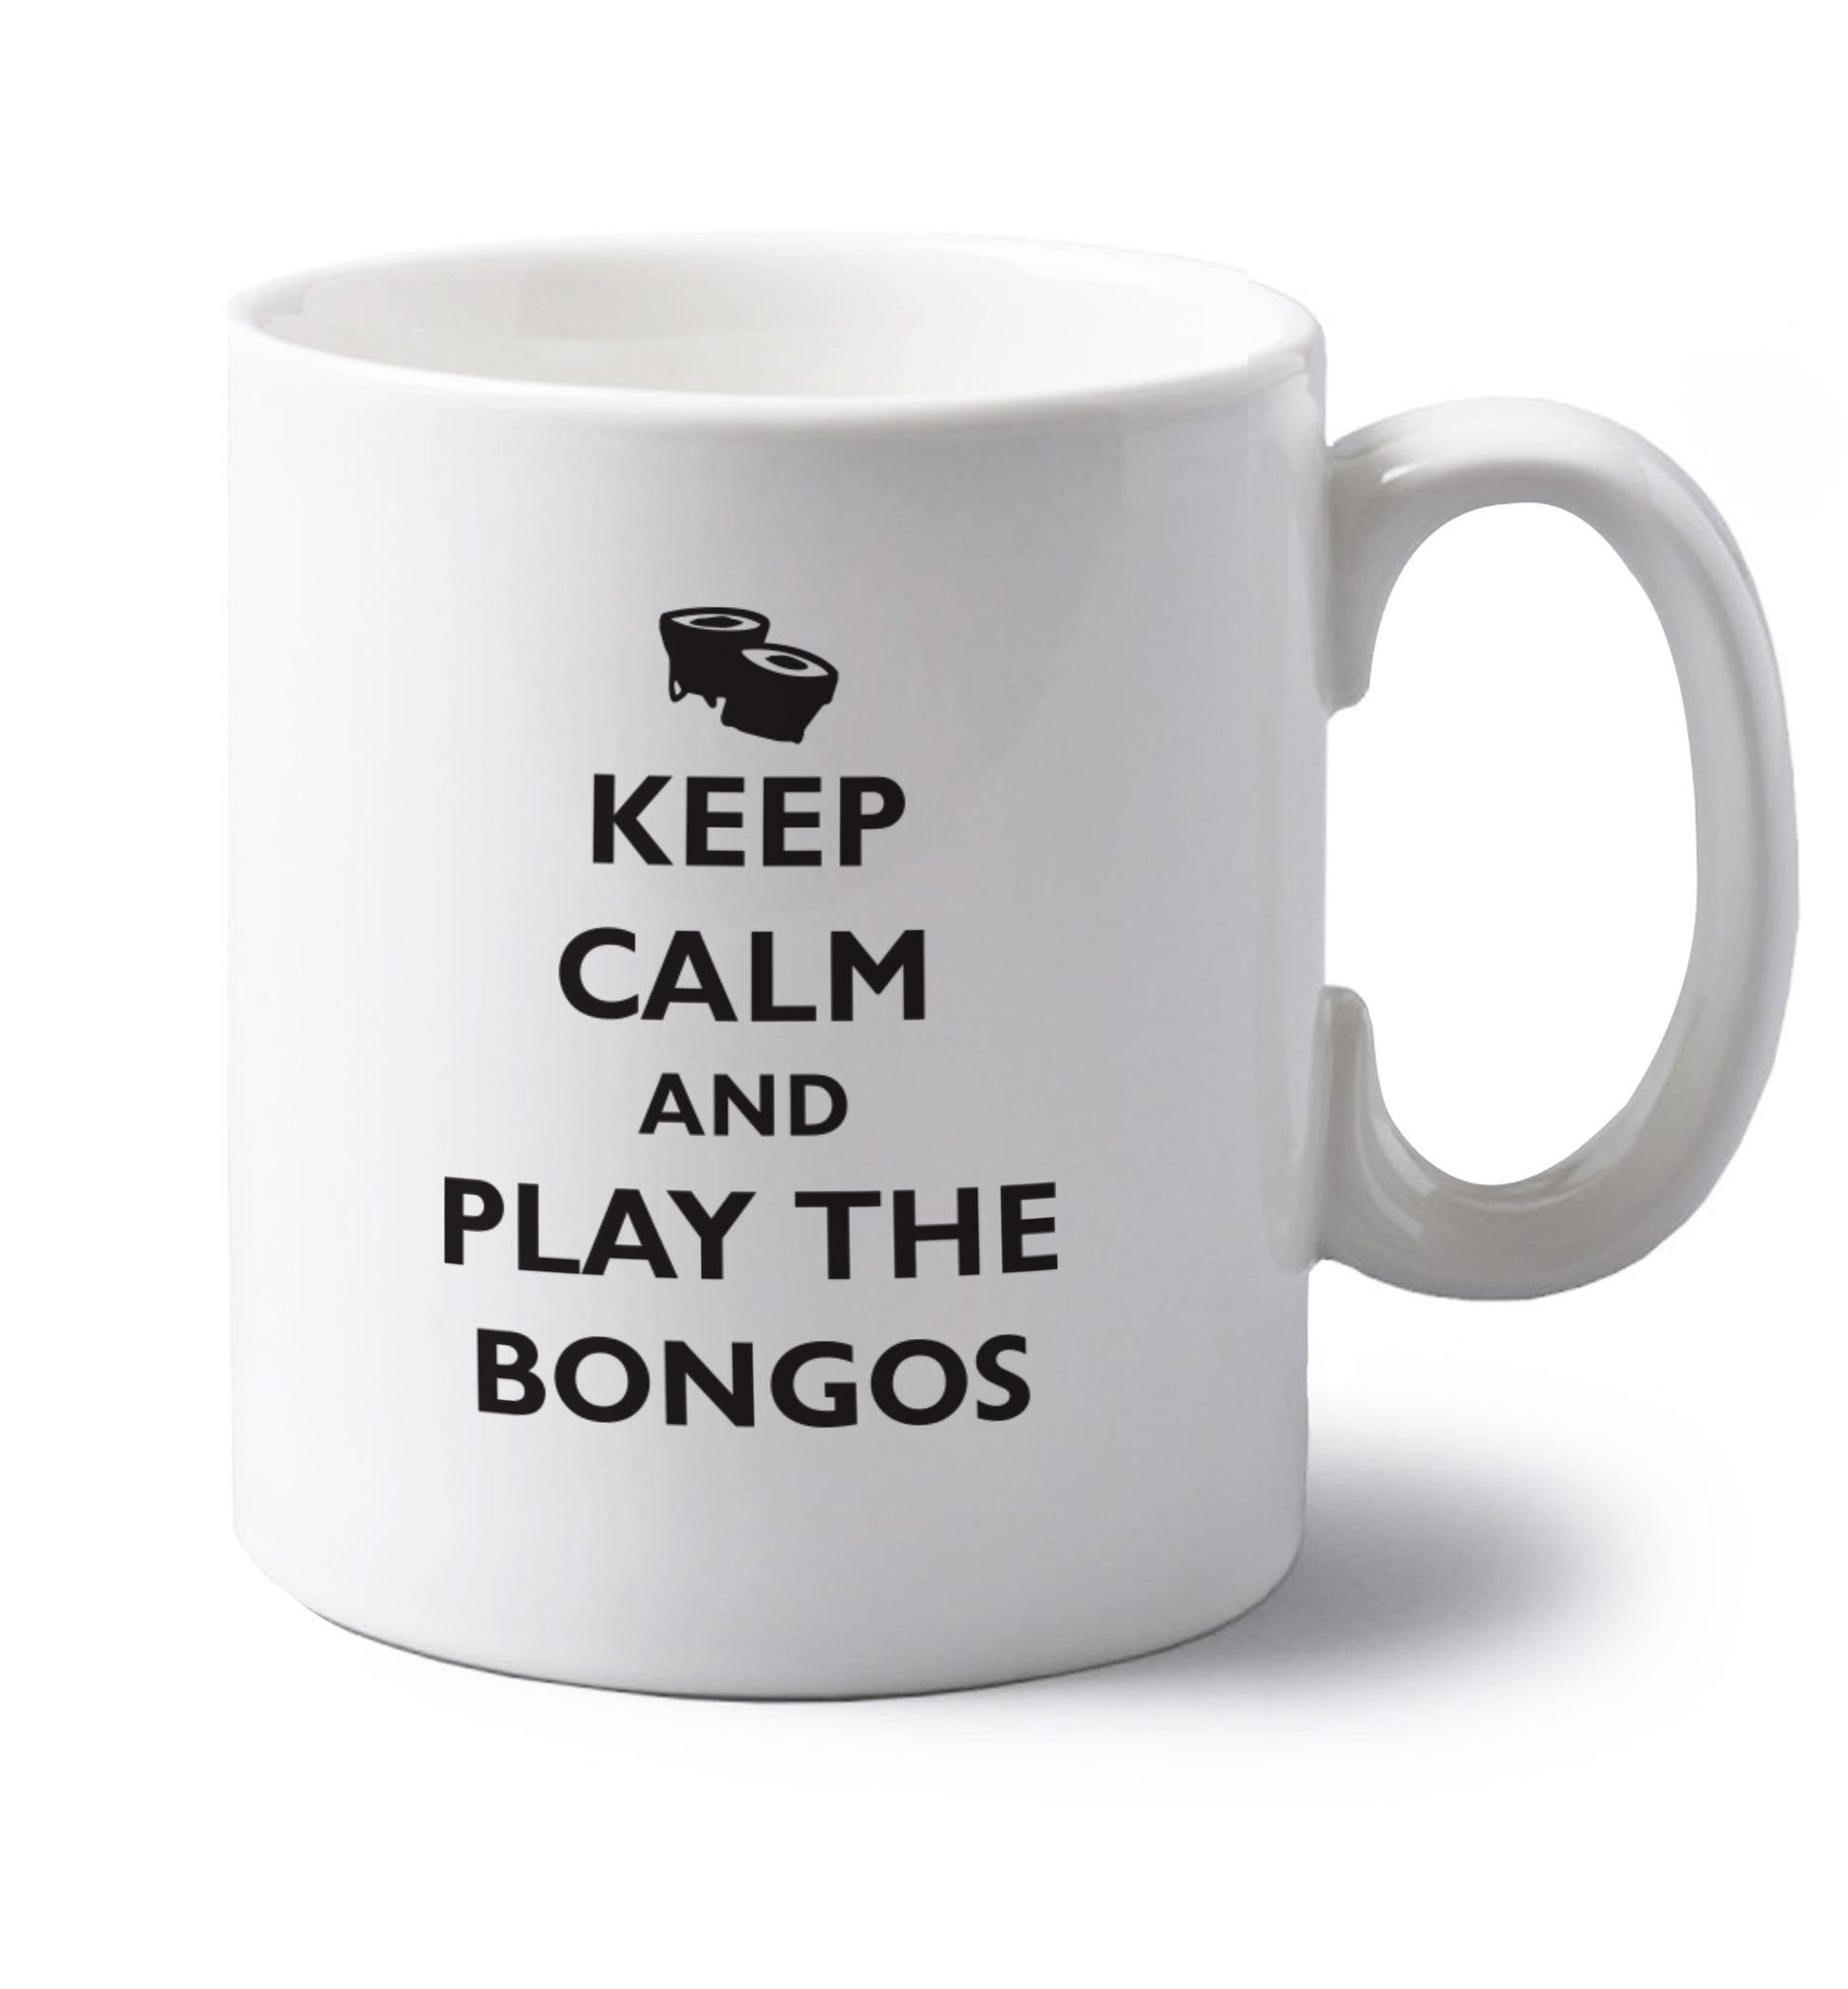 Keep calm and play the bongos left handed white ceramic mug 